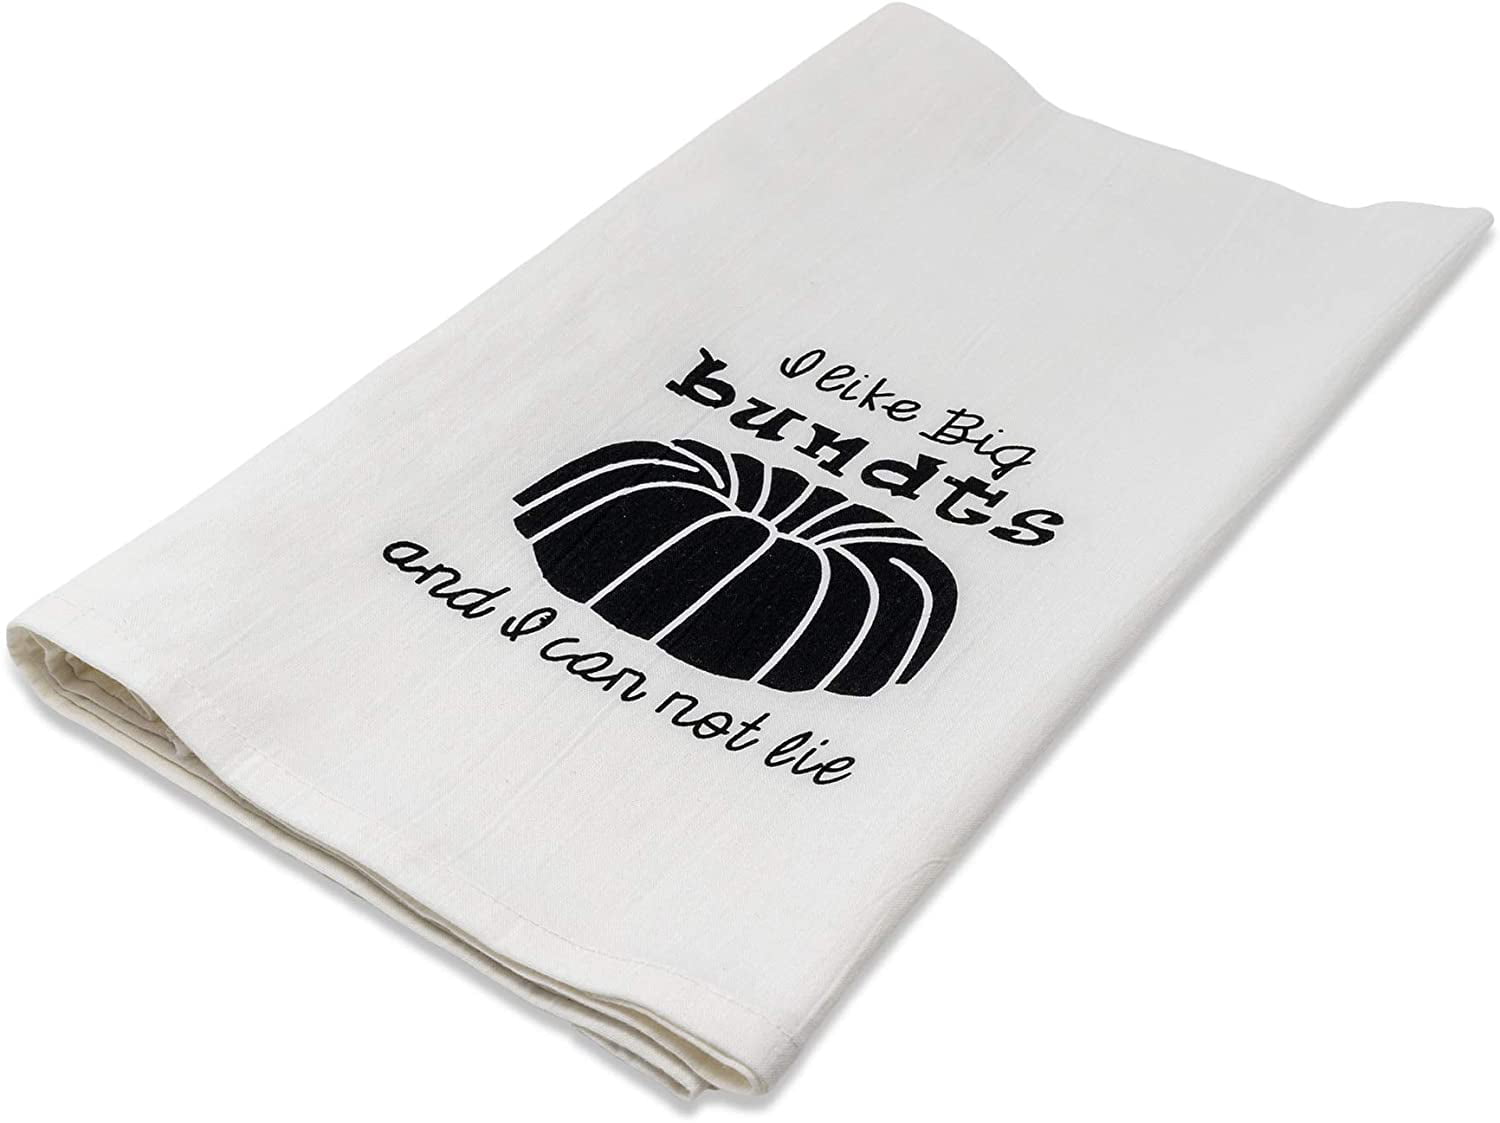 Funny Dishcloth Tea Towel Screen Printed Flour Sack Cotton Kitchen Table Linens I Like Big Bundts and I Can Not Lie 